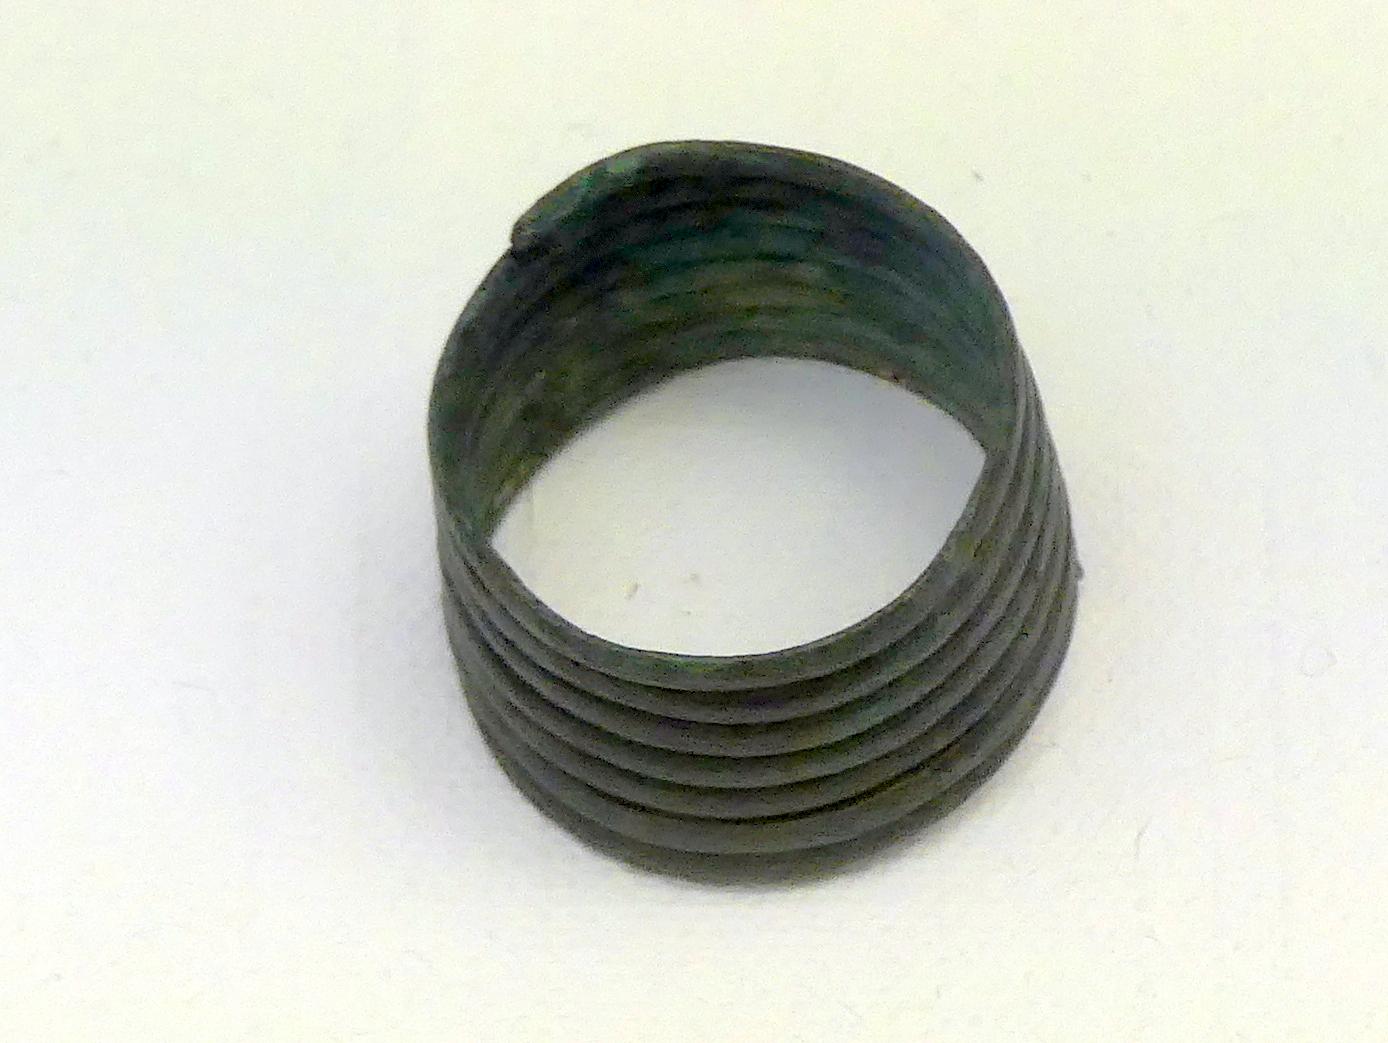 Spiralarmring, Frühe Bronzezeit, 3365 - 1200 v. Chr., Bild 1/2